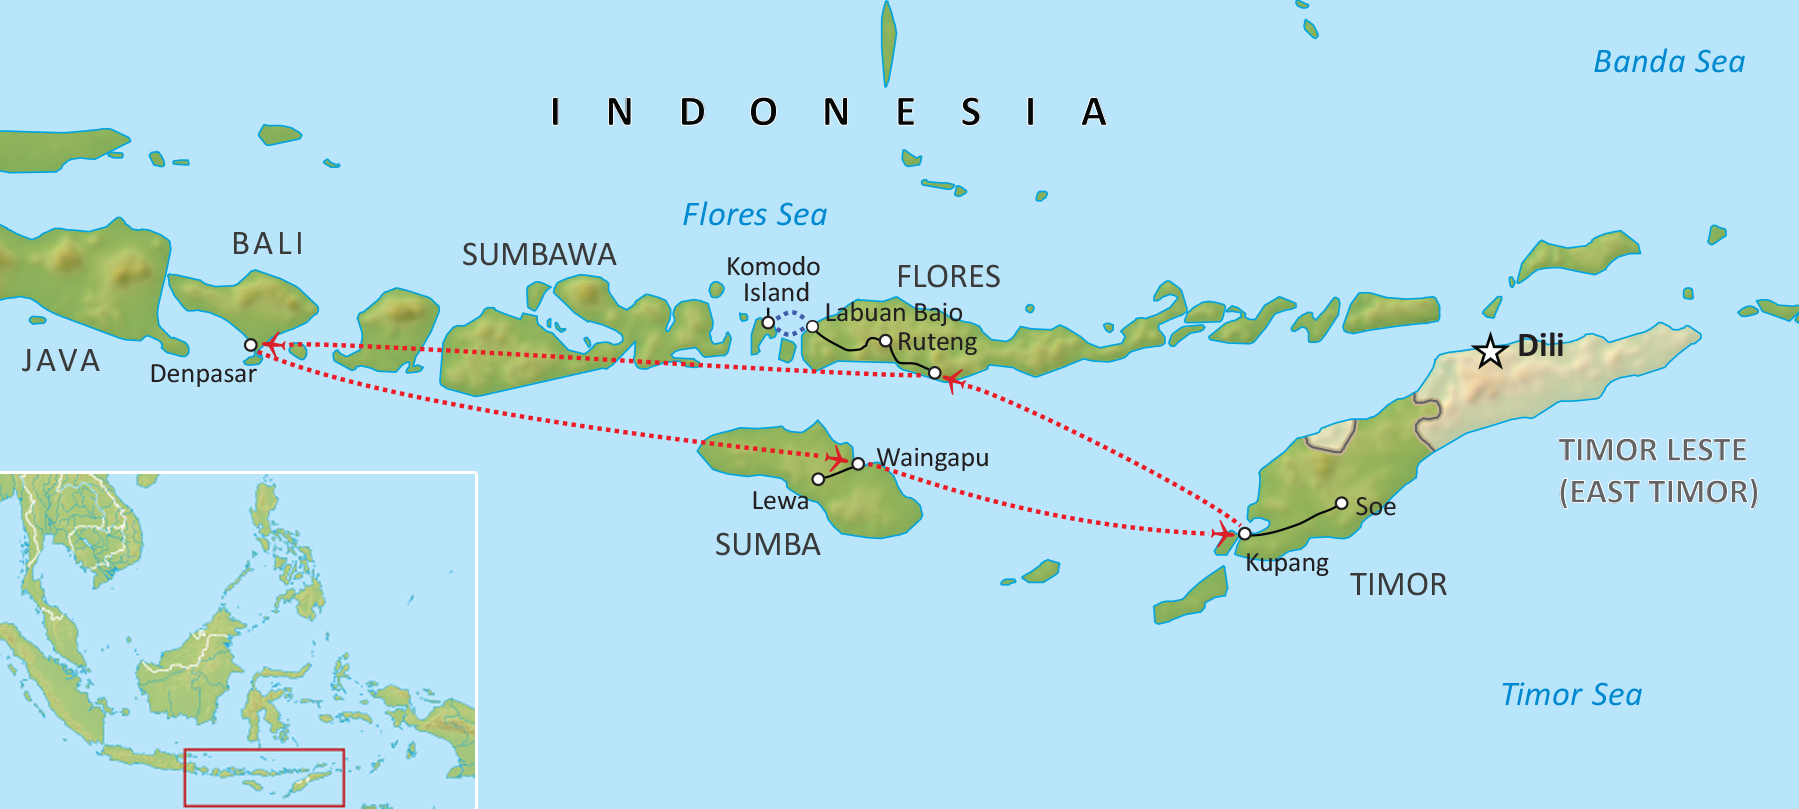 WINGS Birding Tours to Indonesia: The Lesser Sunda Islands - Sumba